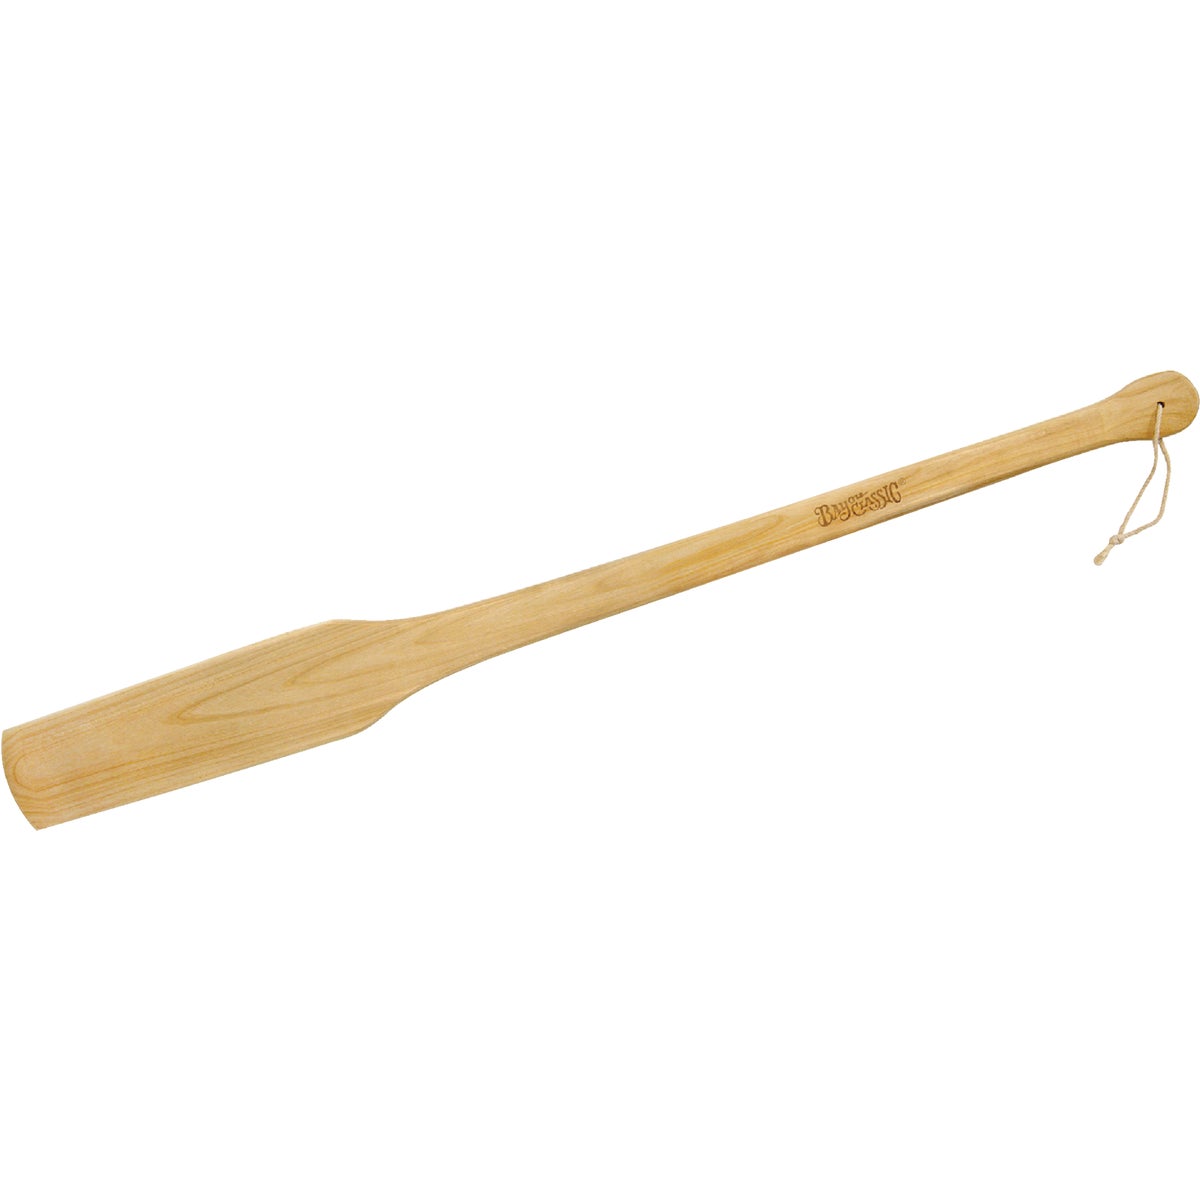 Item 801265, Cajun stir wood paddle. Ideal for stirring deep into large boiling pots.